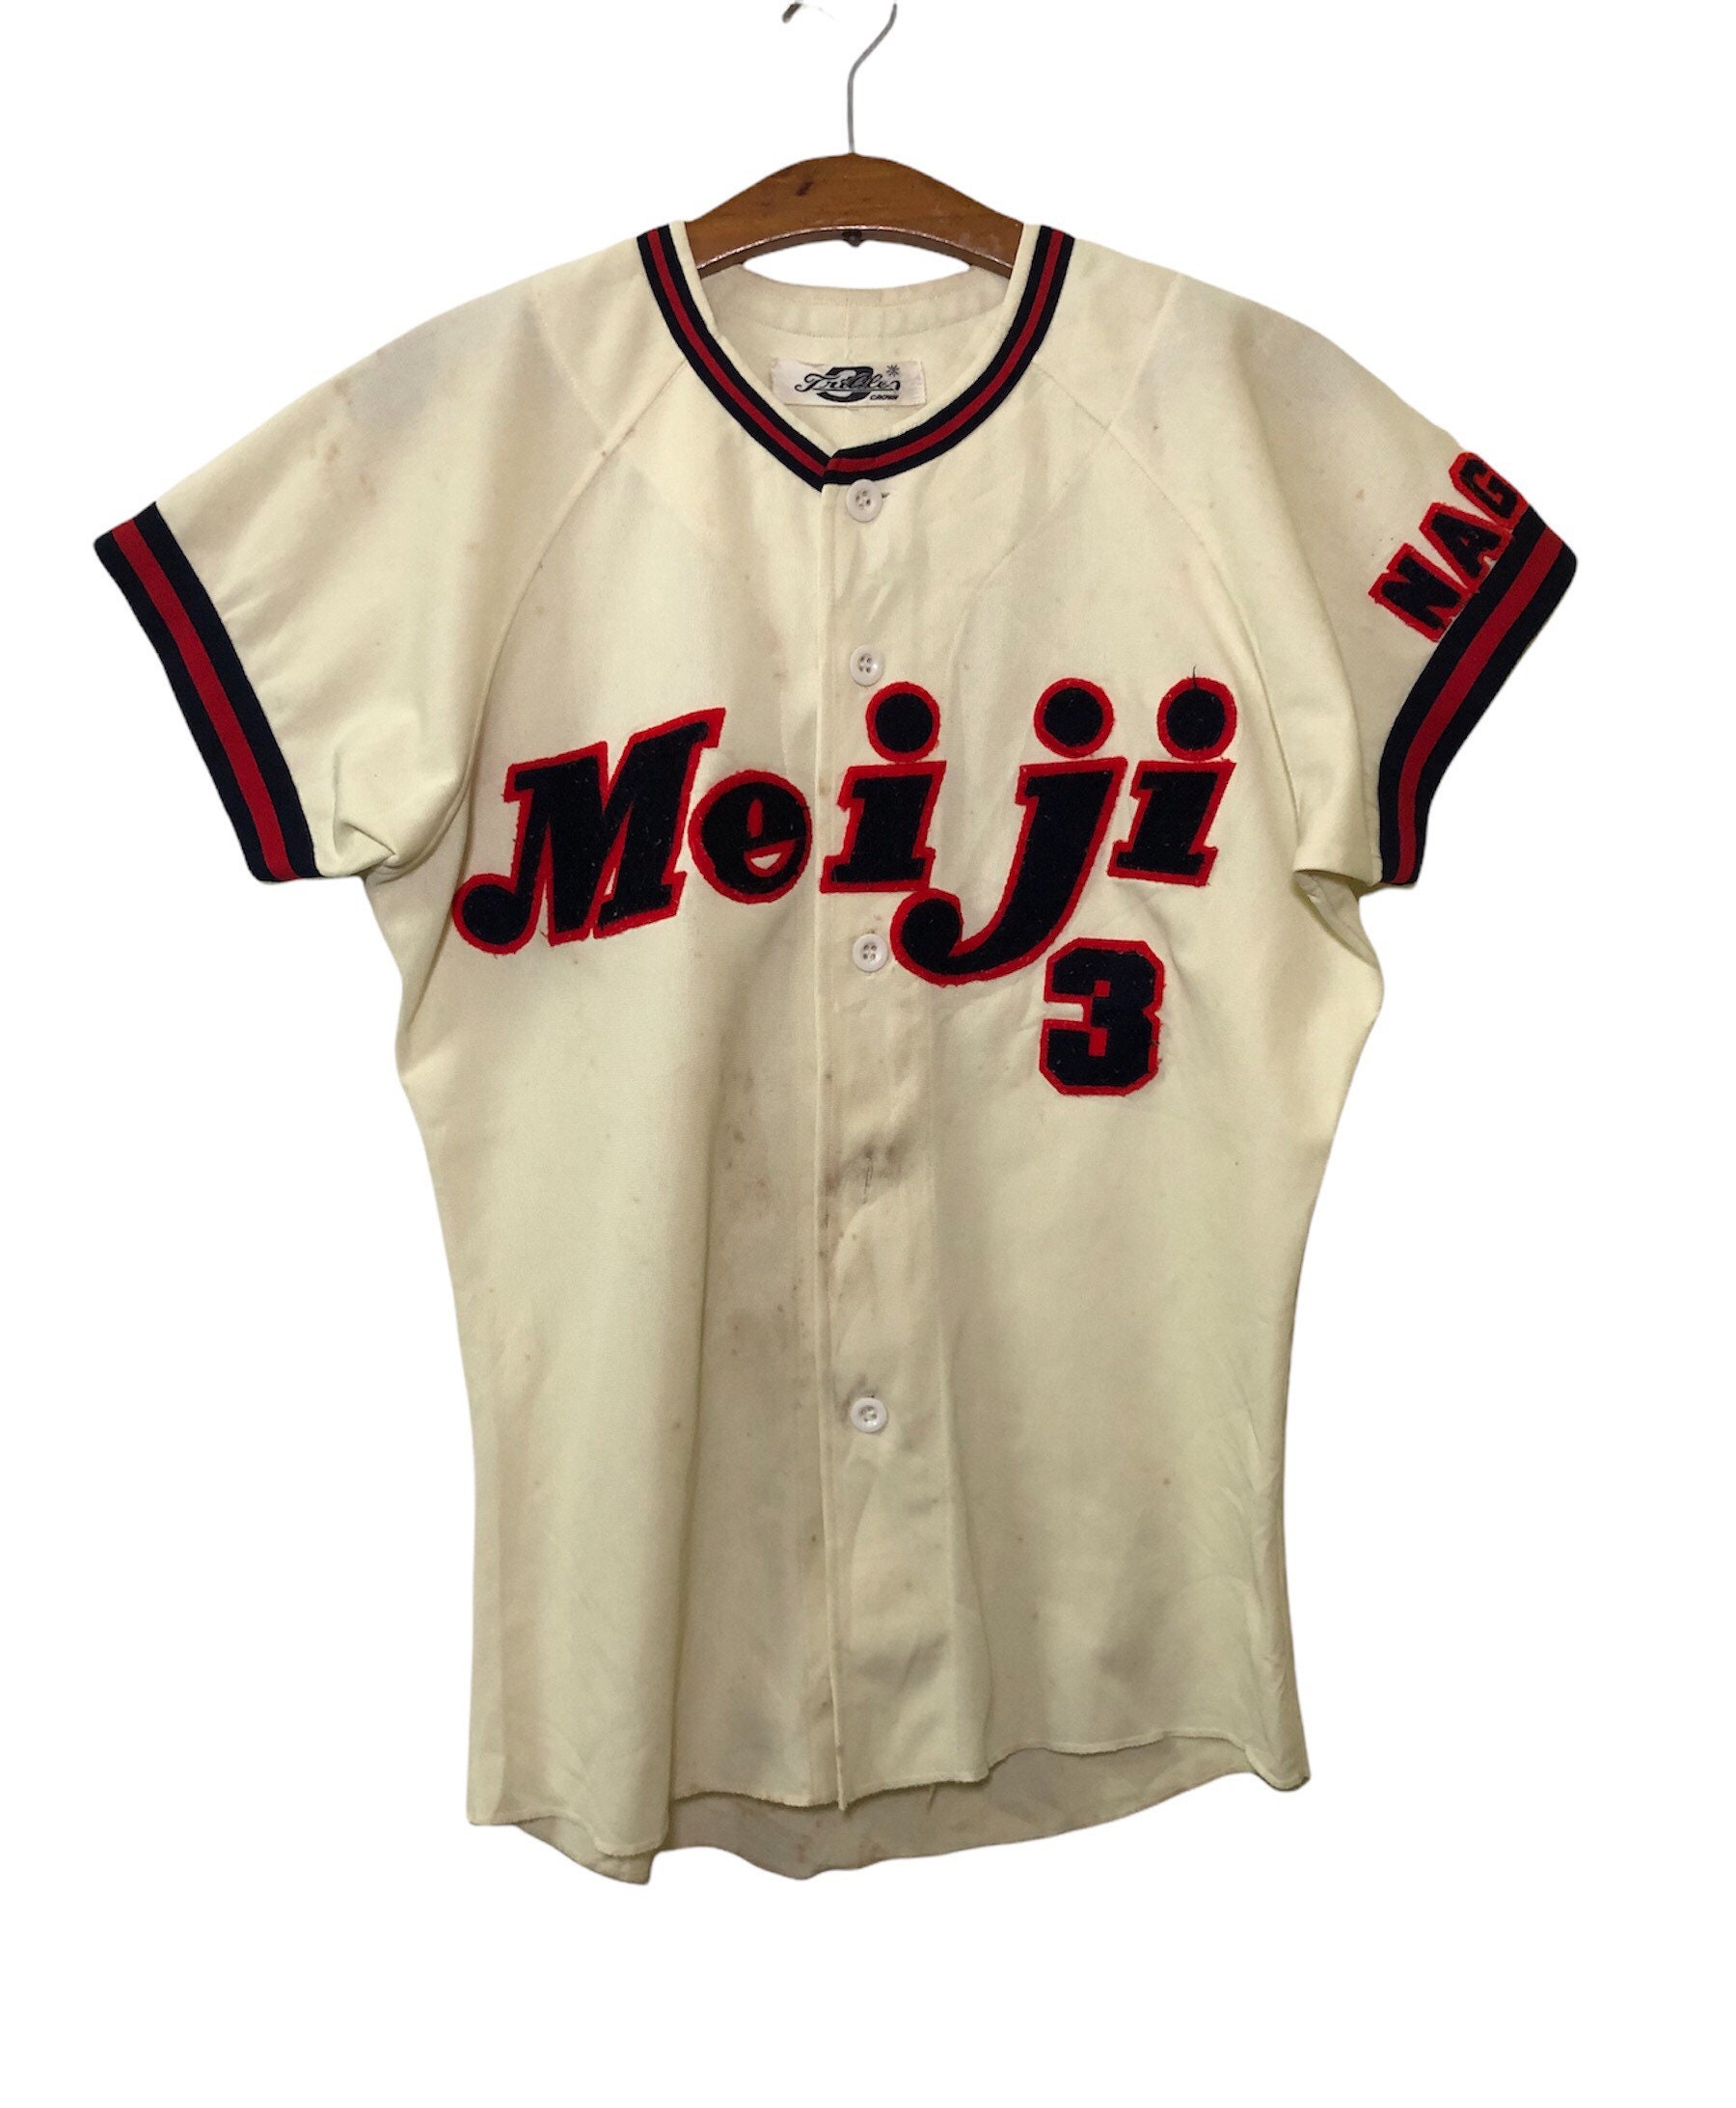 Vintage 90s Reward OHTSU Japan Club See Through Baseball Jersey M Fit S